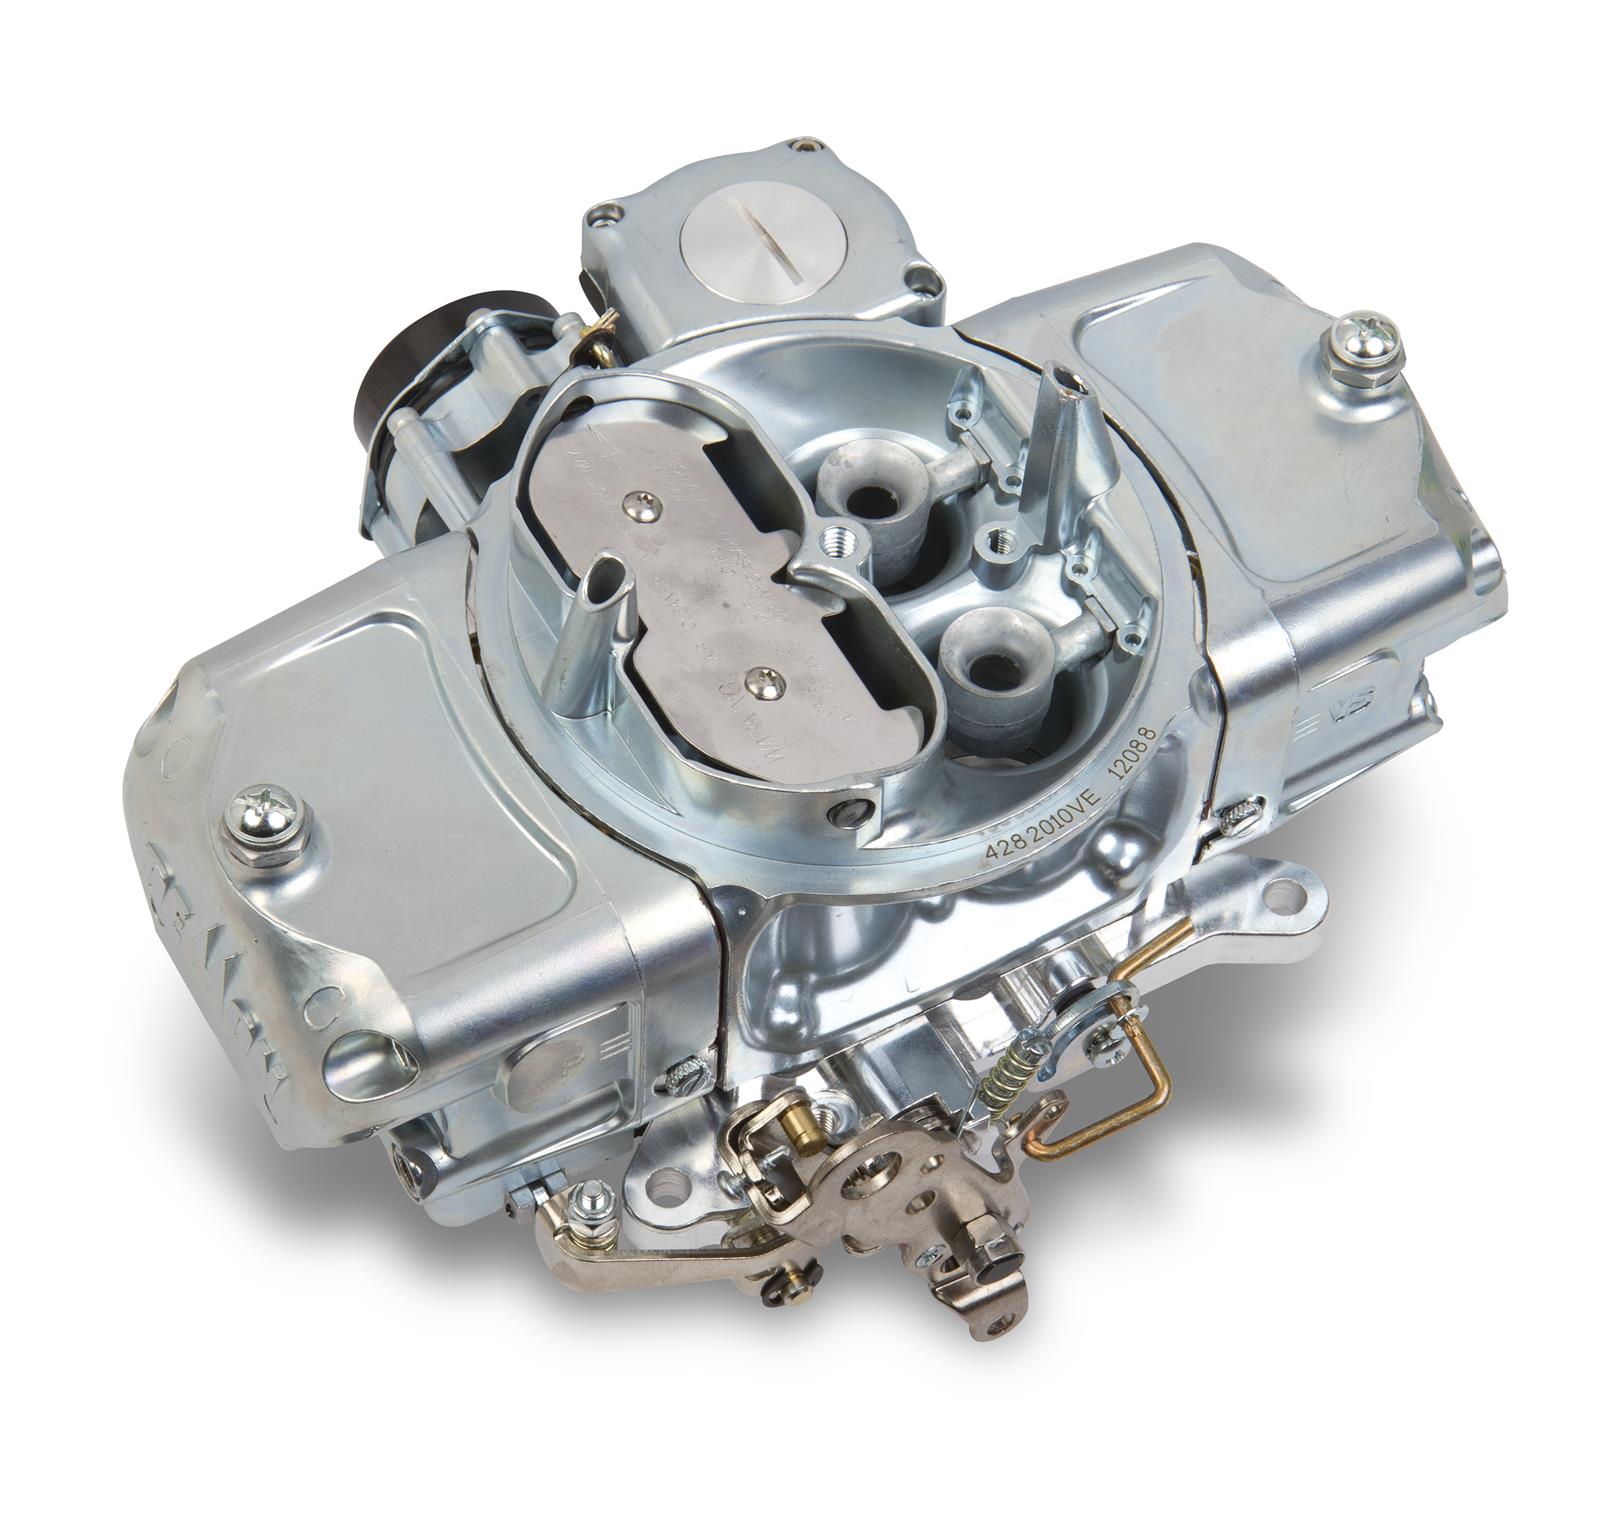 Carburetor for Motorsense vidaXL 141550, 141003 52ccm / Demon RQ580